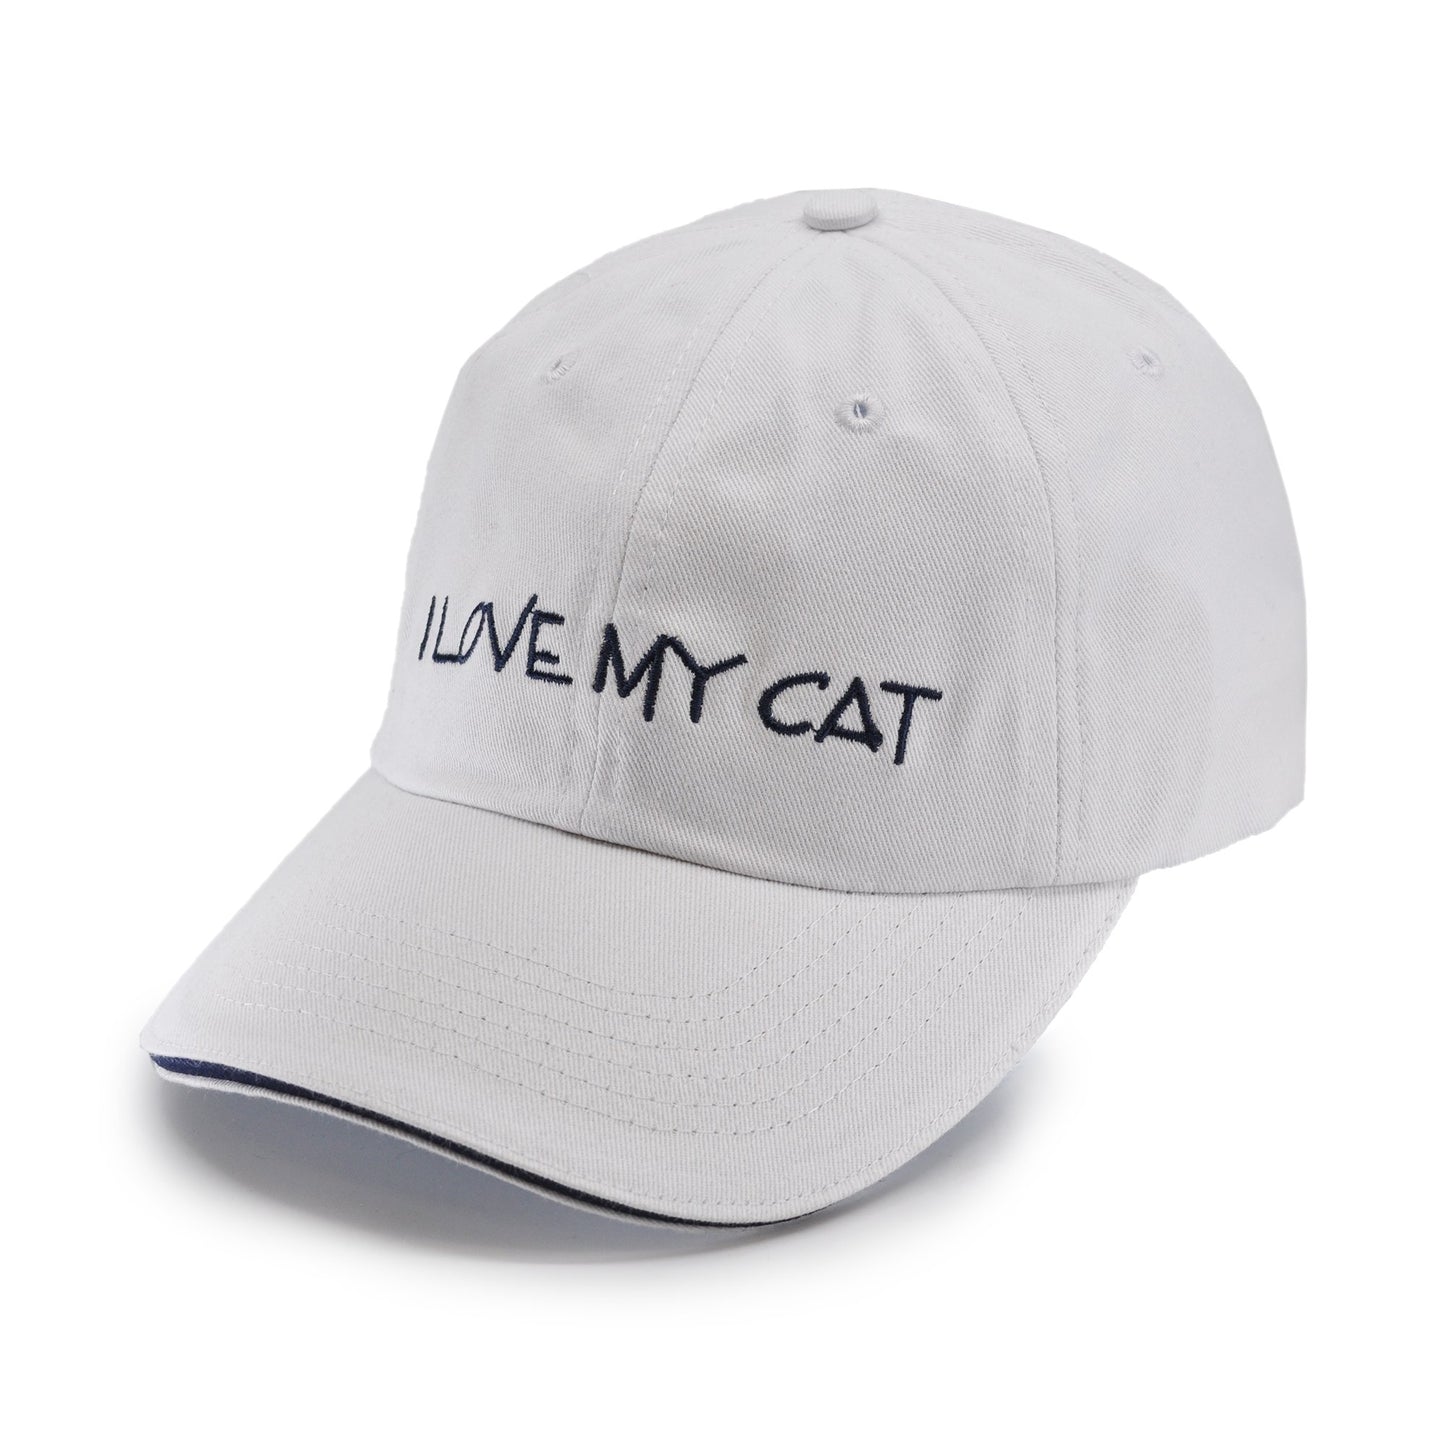 Pet Collection "I Love My Cat" 100% Cotton Adjustable Sports Cap.